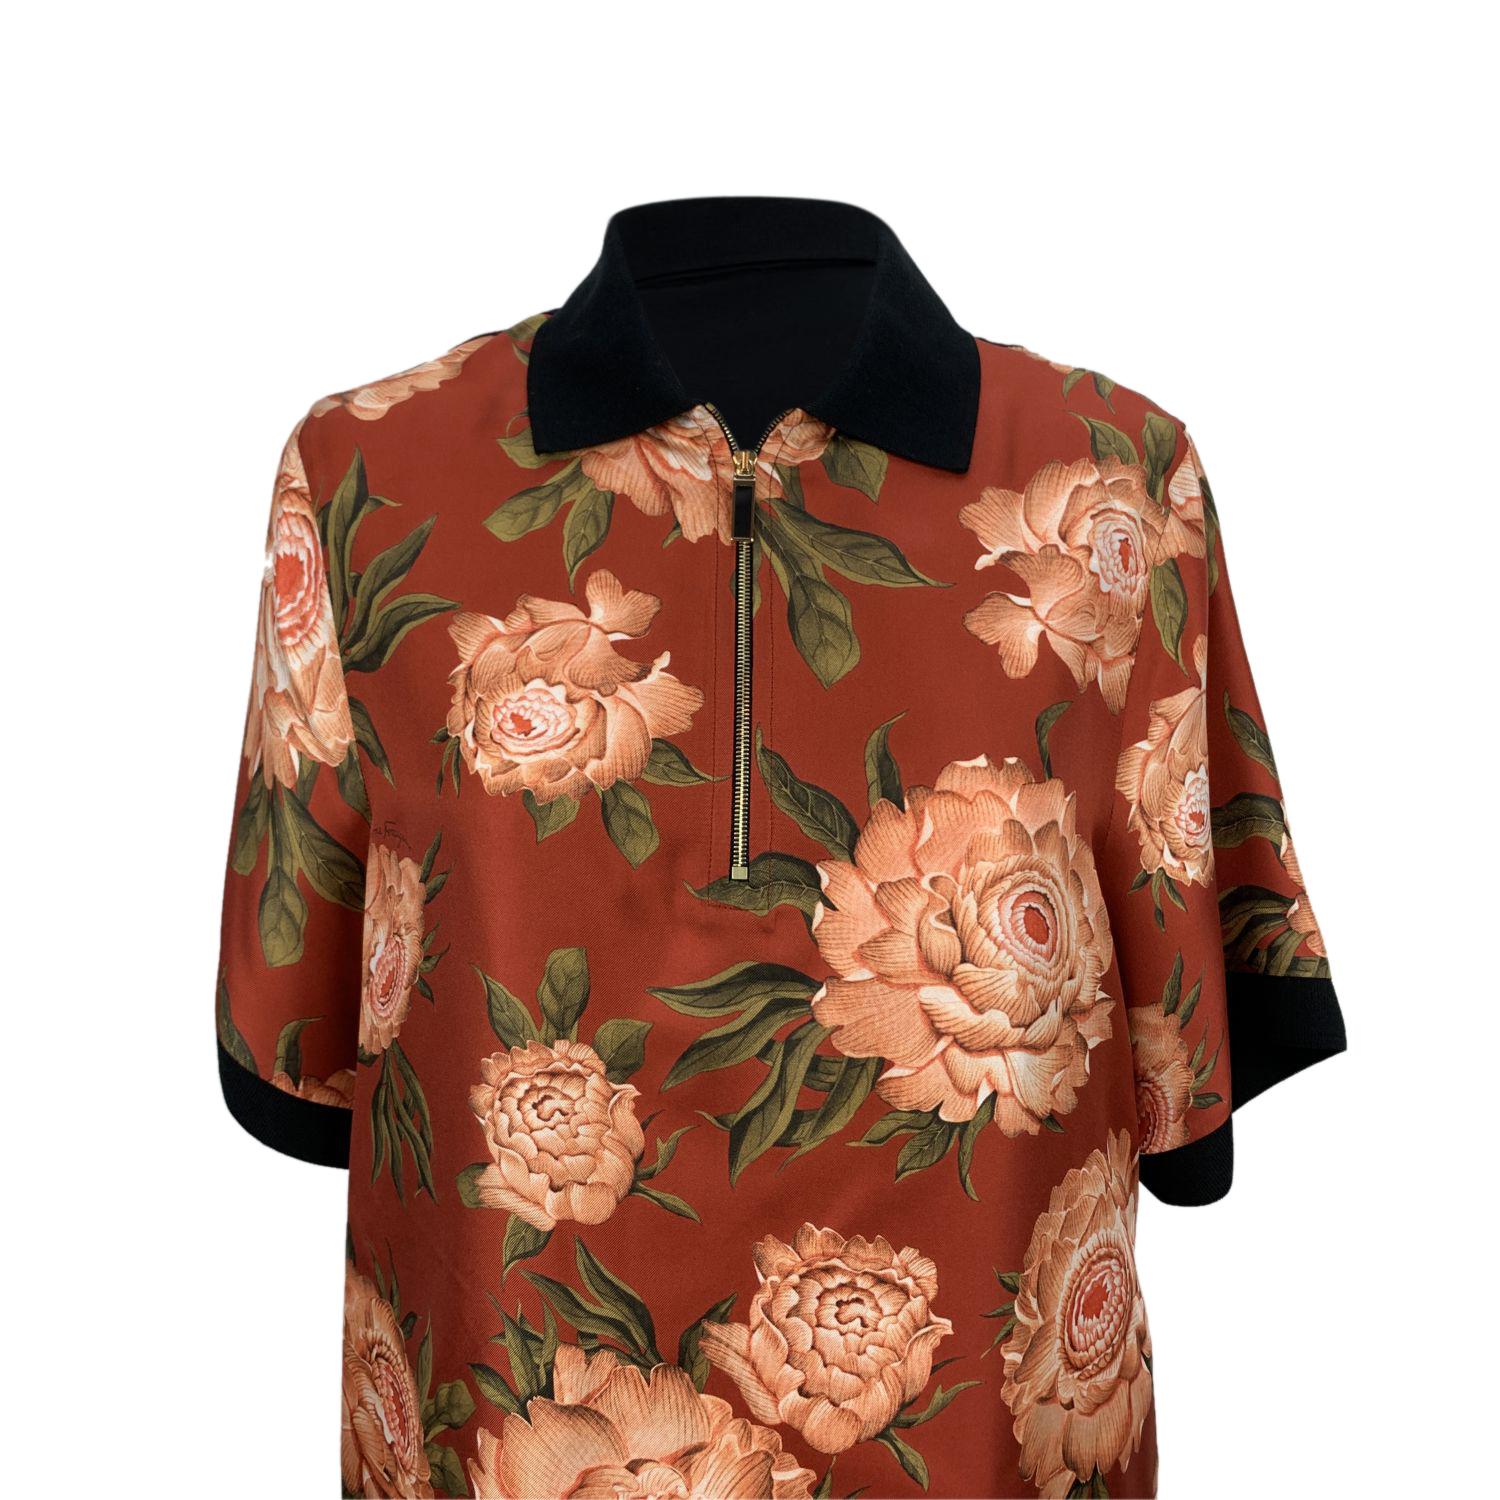 Brown Salvatore Ferragamo Floral Silk and Cotton T-Shirt Dress Size 40 IT